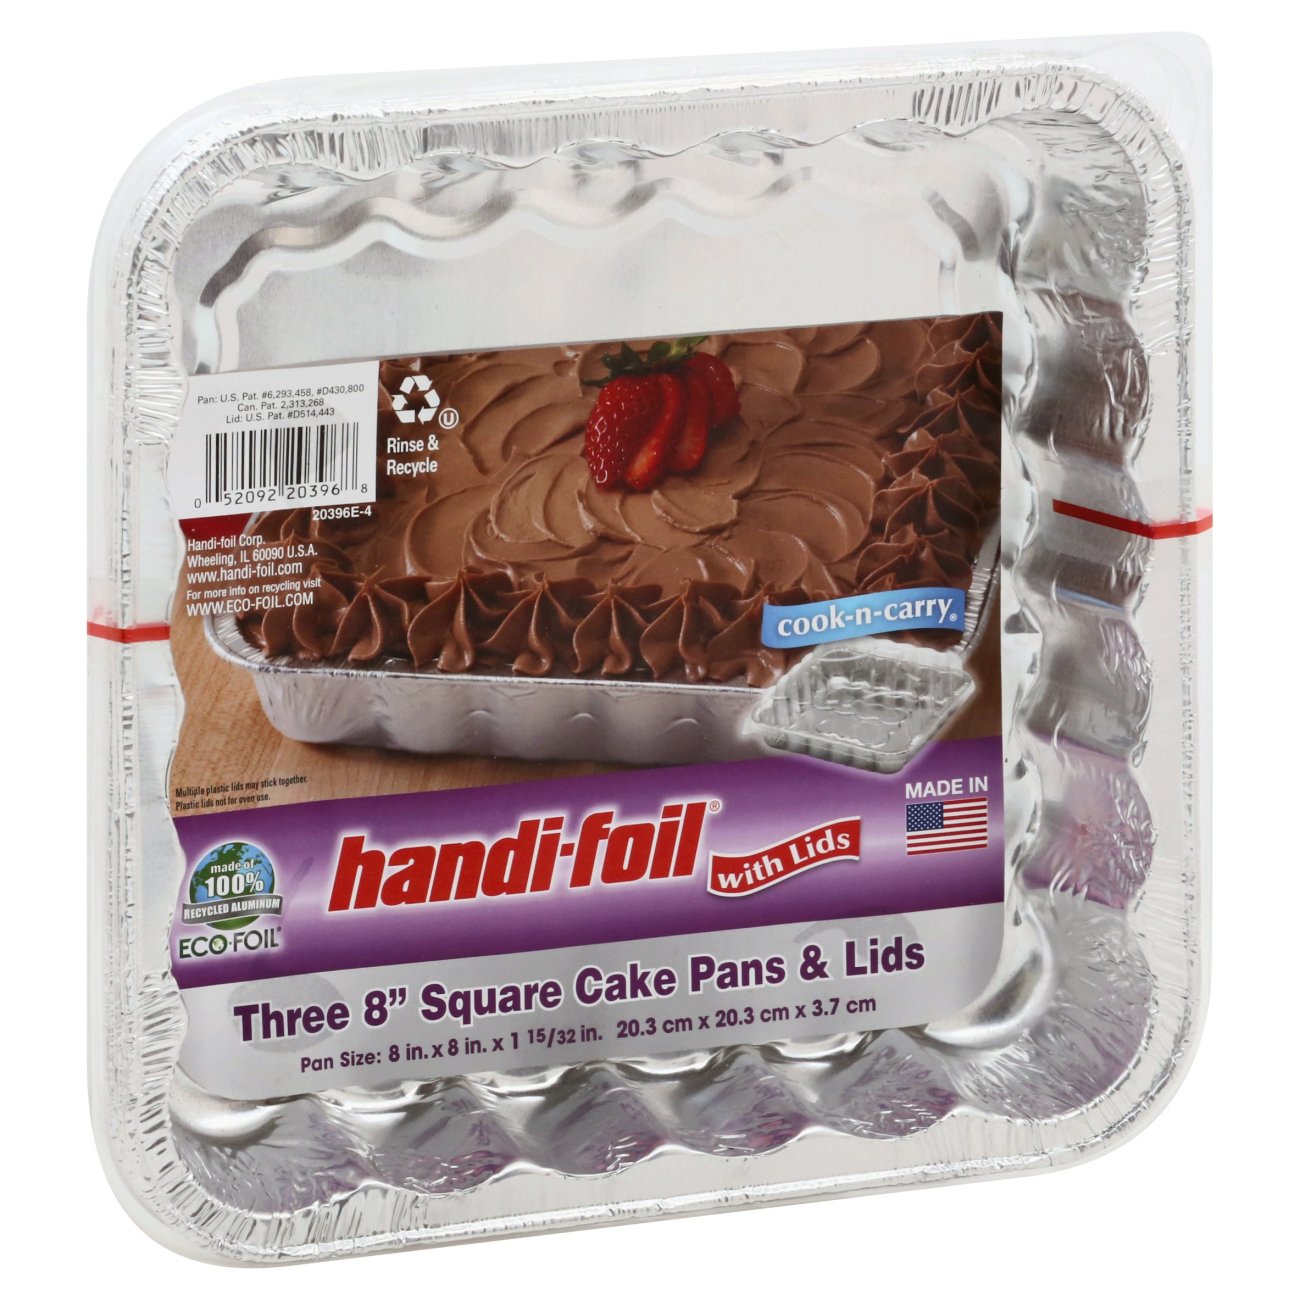 Handi-foil® Cook-n-Carry® Square Cake Pans & Lids - 6 Pack